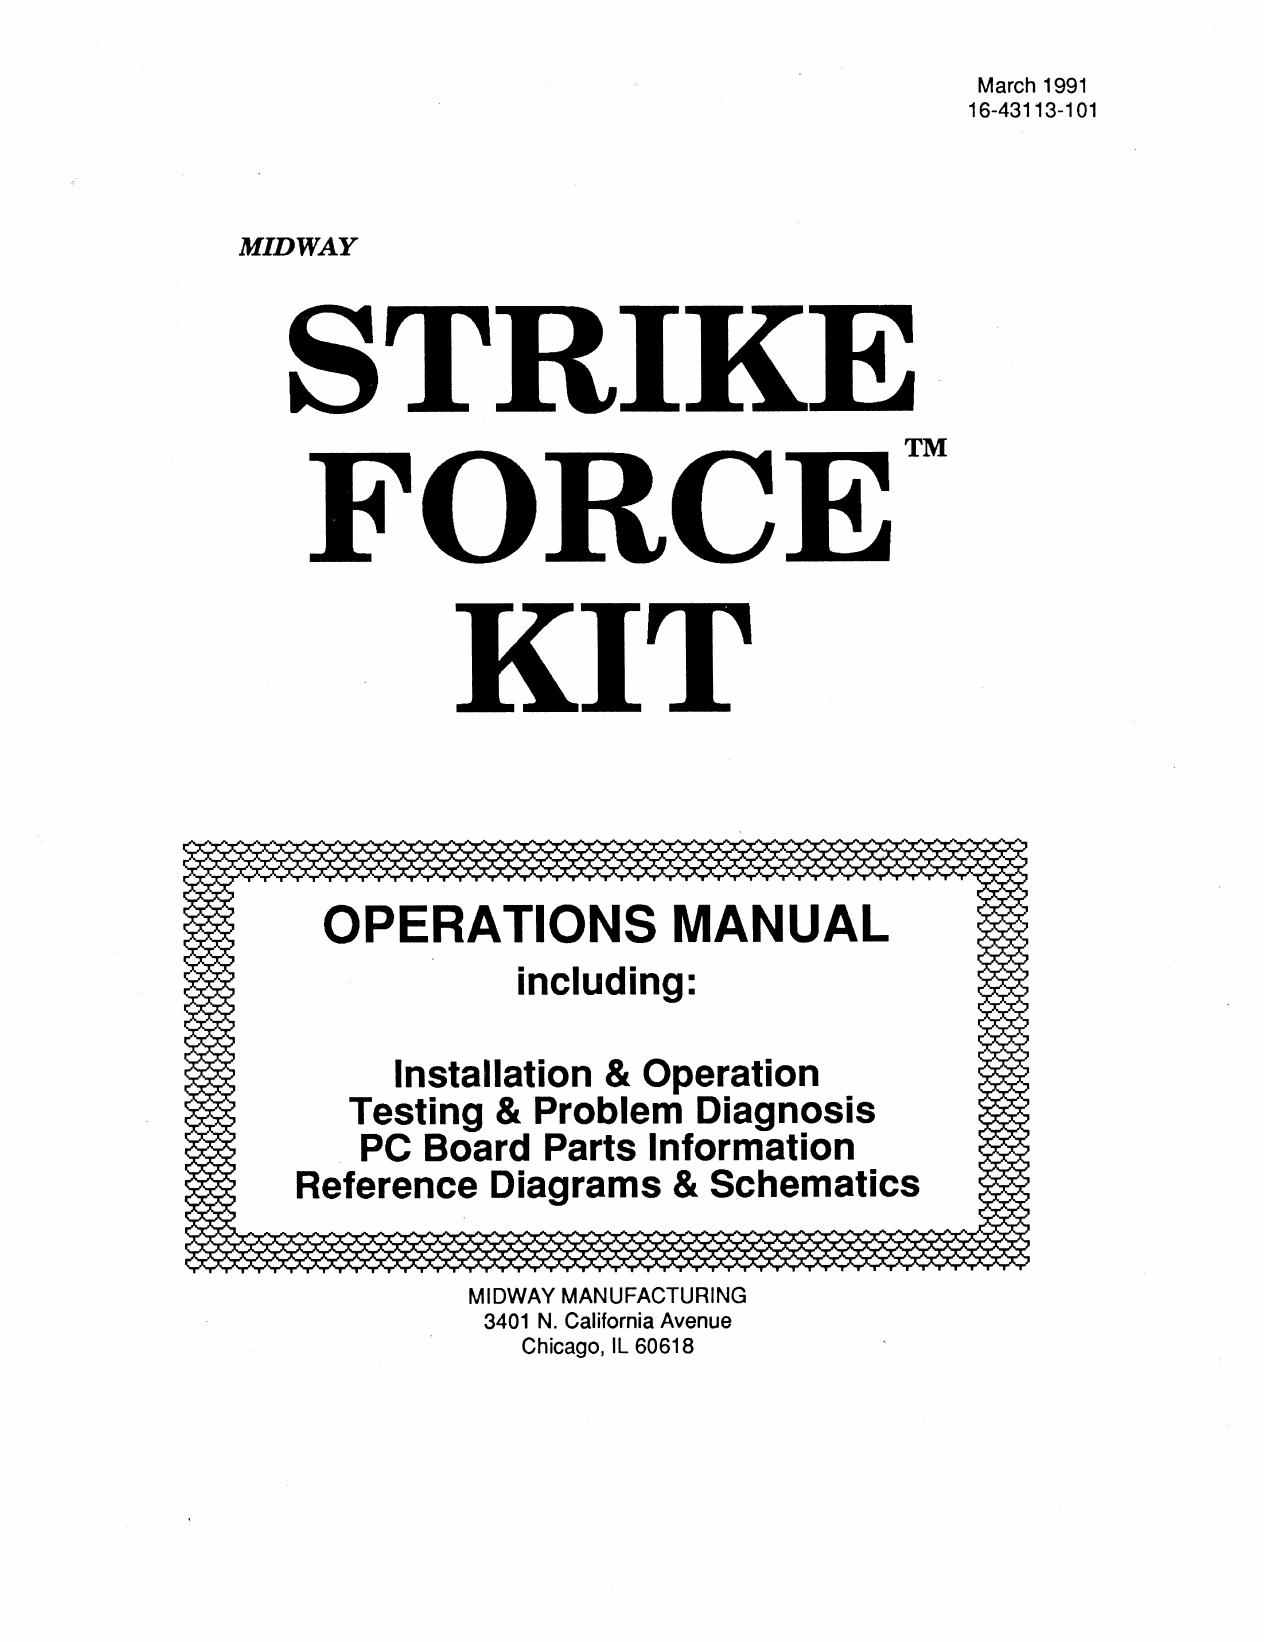 Strike Force Kit